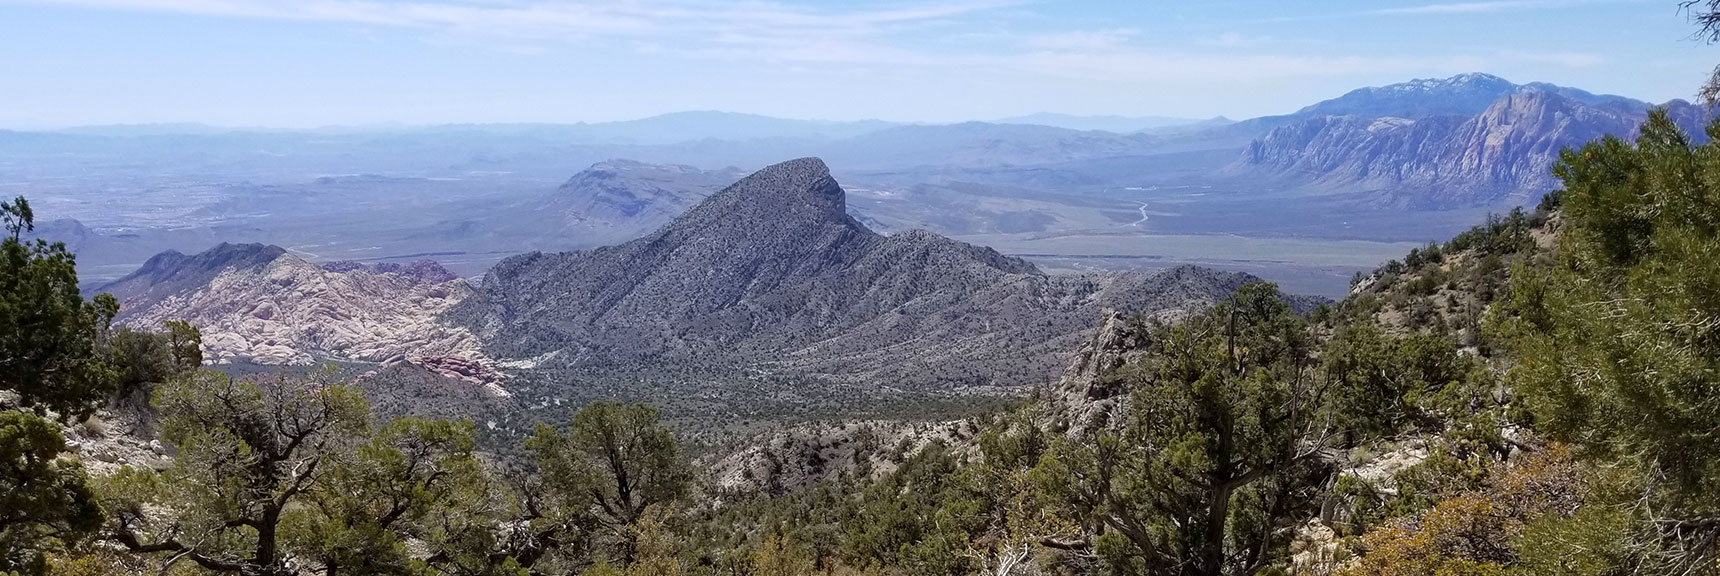 Turtlehead Peak Viewed Down La Madre Summit Pass Route at 7,200ft, Nevada